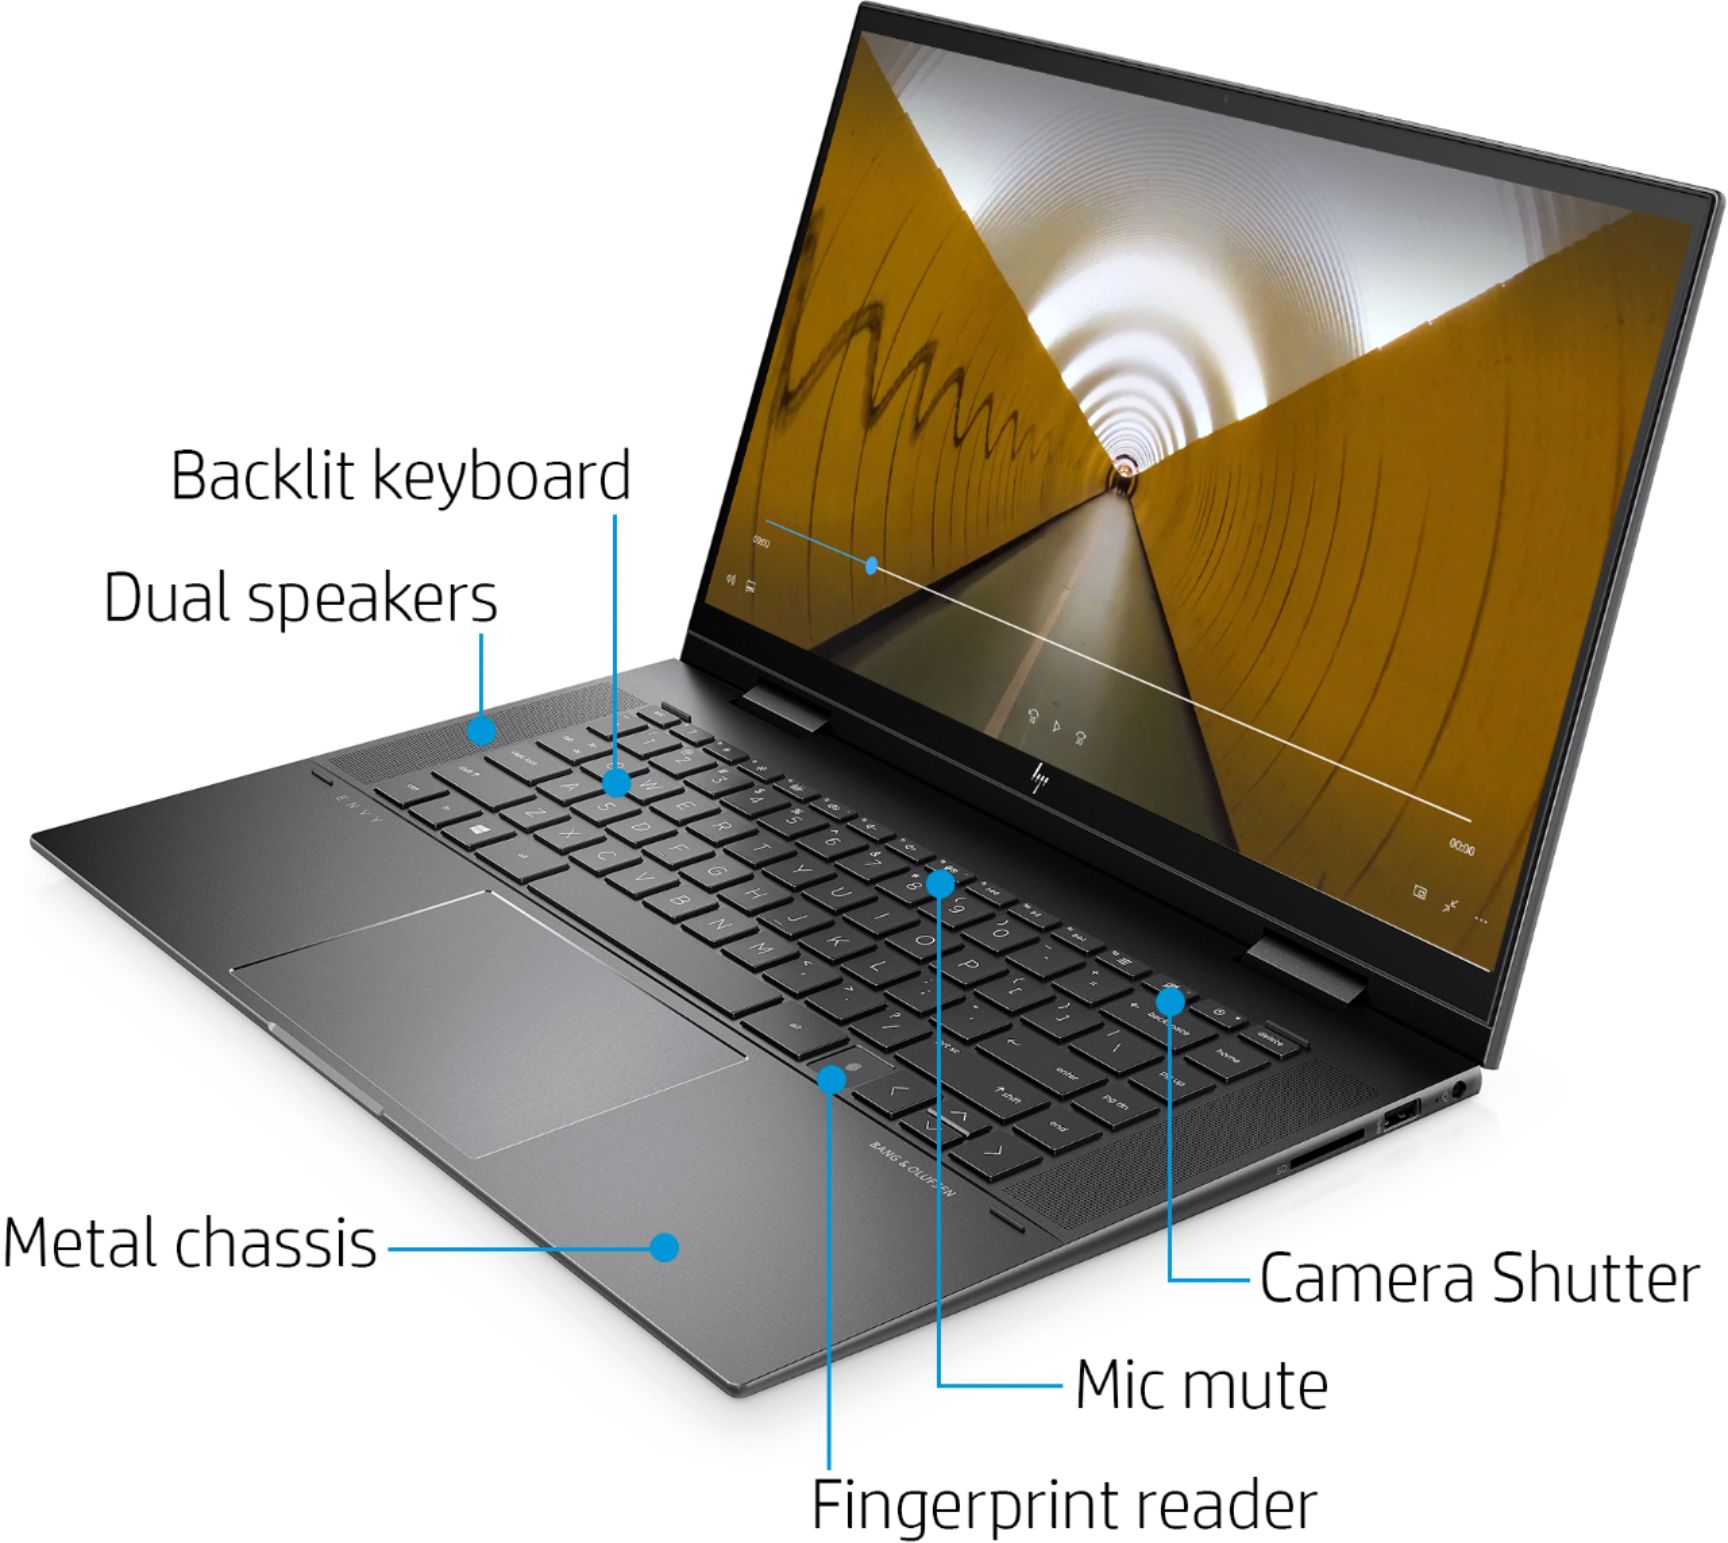 HP - Envy x360 2-in-1 15.6 Touch-Screen Laptop - AMD Ryzen 7 - 8GB Memory  - 512GB SSD - Nightfall Black